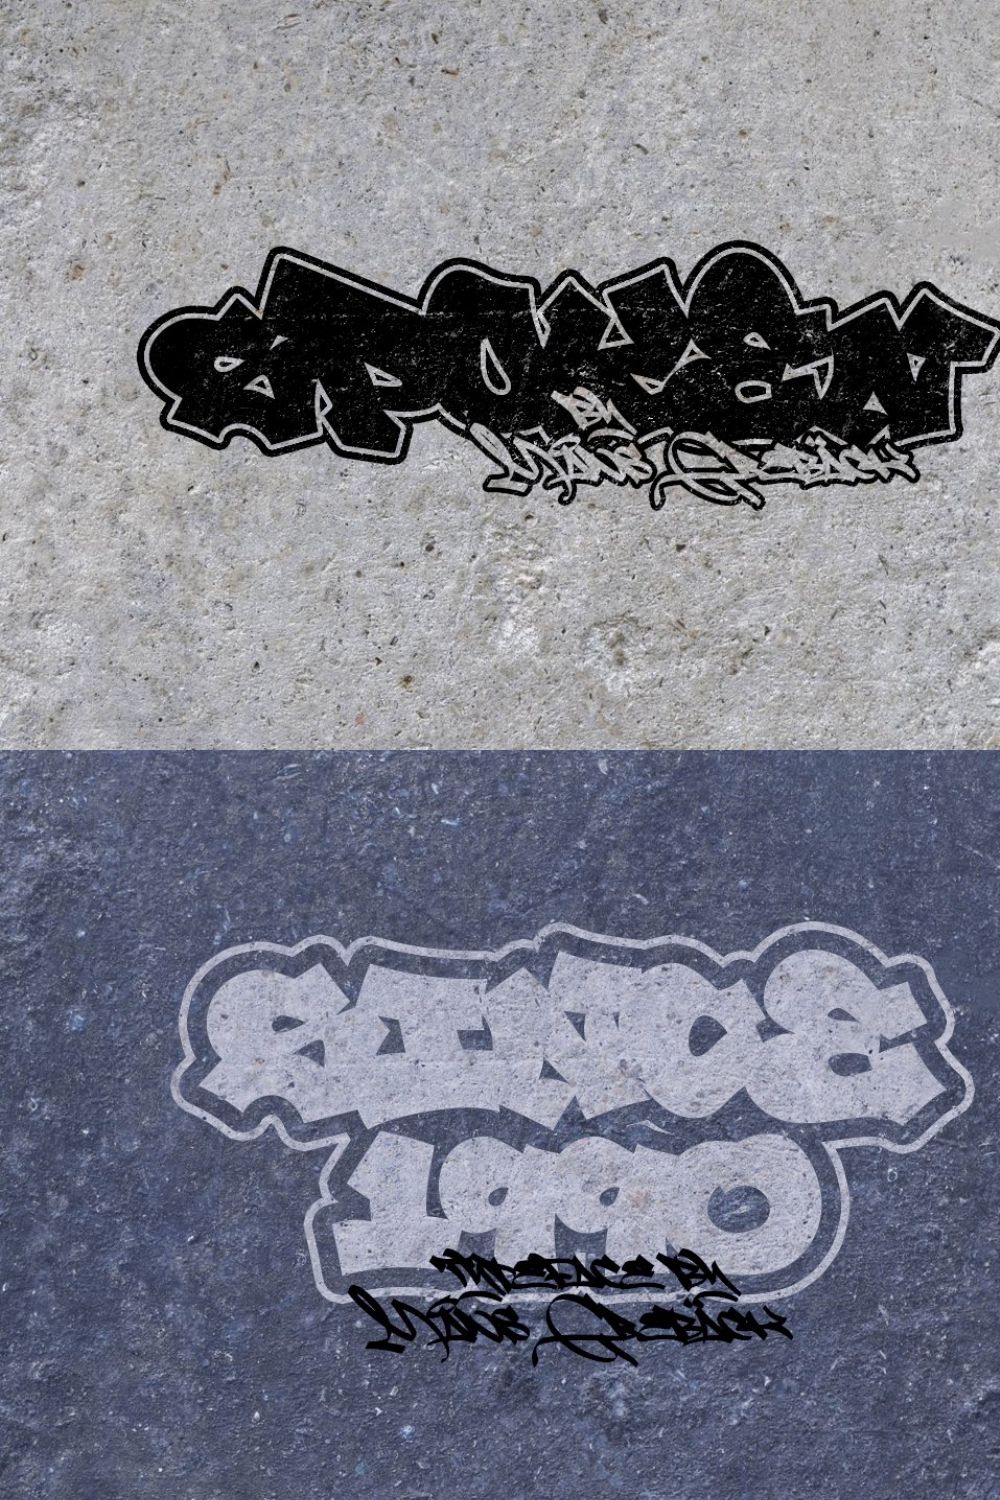 Spoken - Multistyle Graffiti font pinterest preview image.